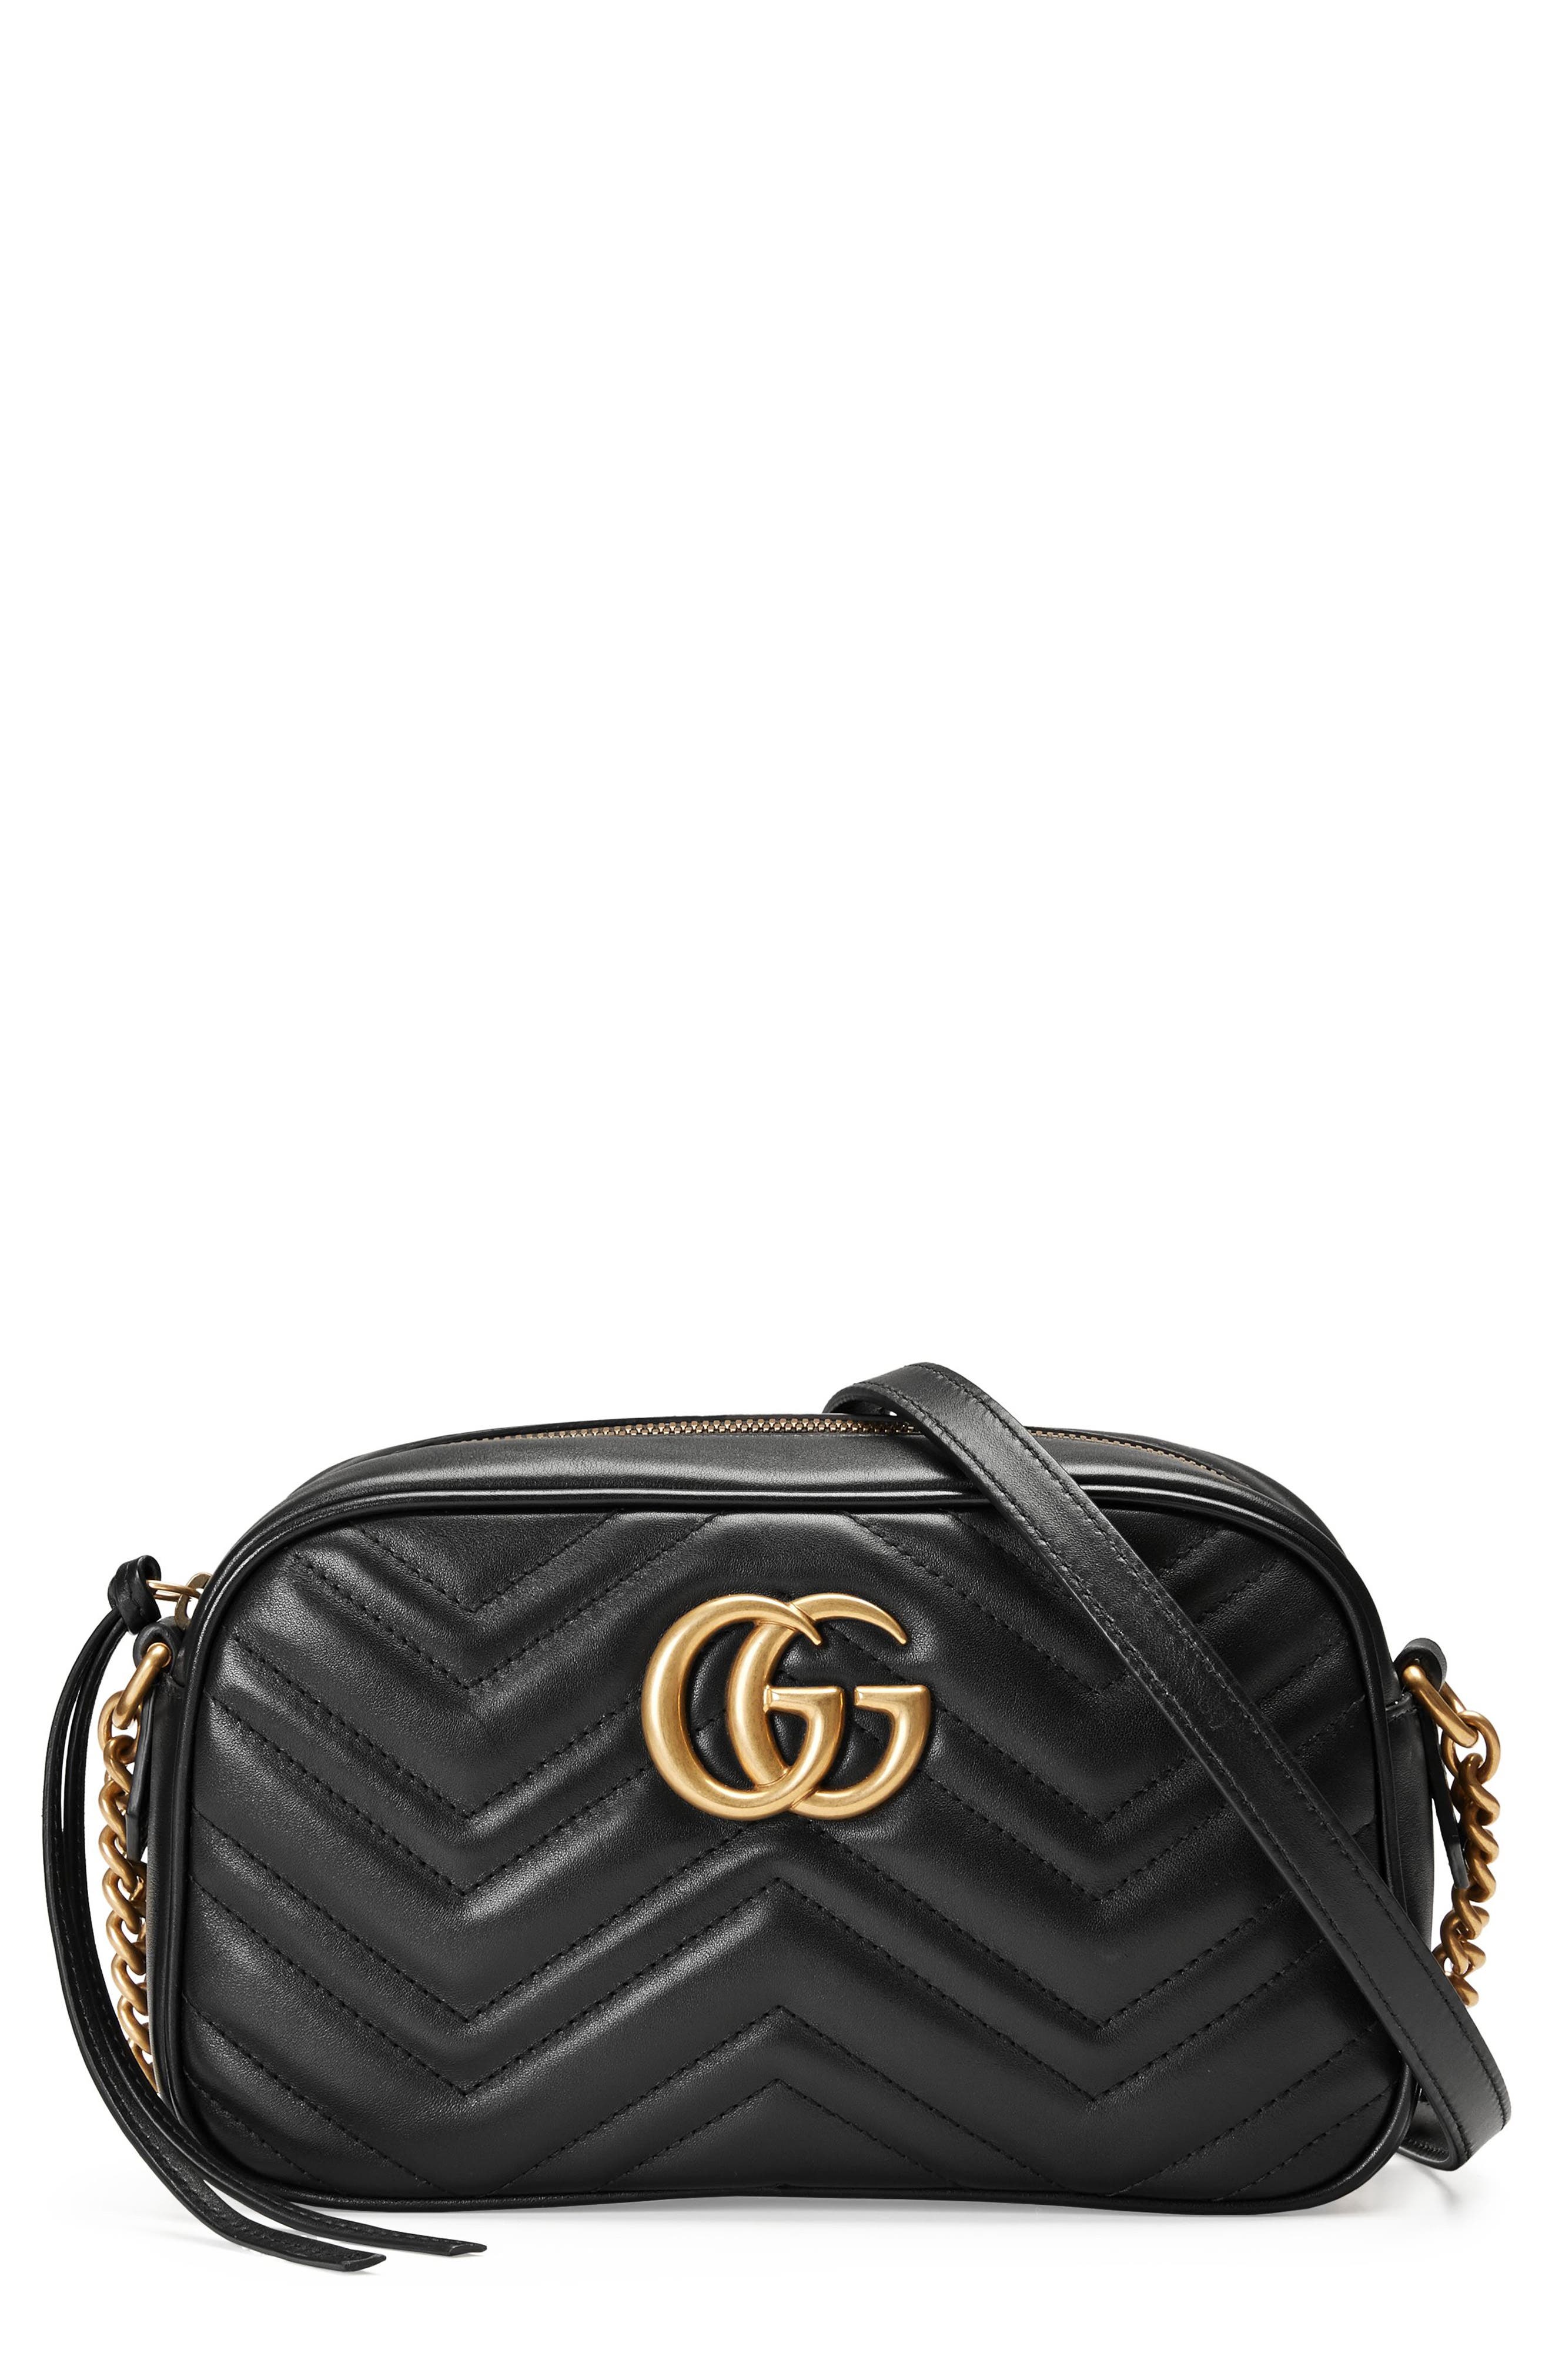 gucci handbags sale at nordstrom